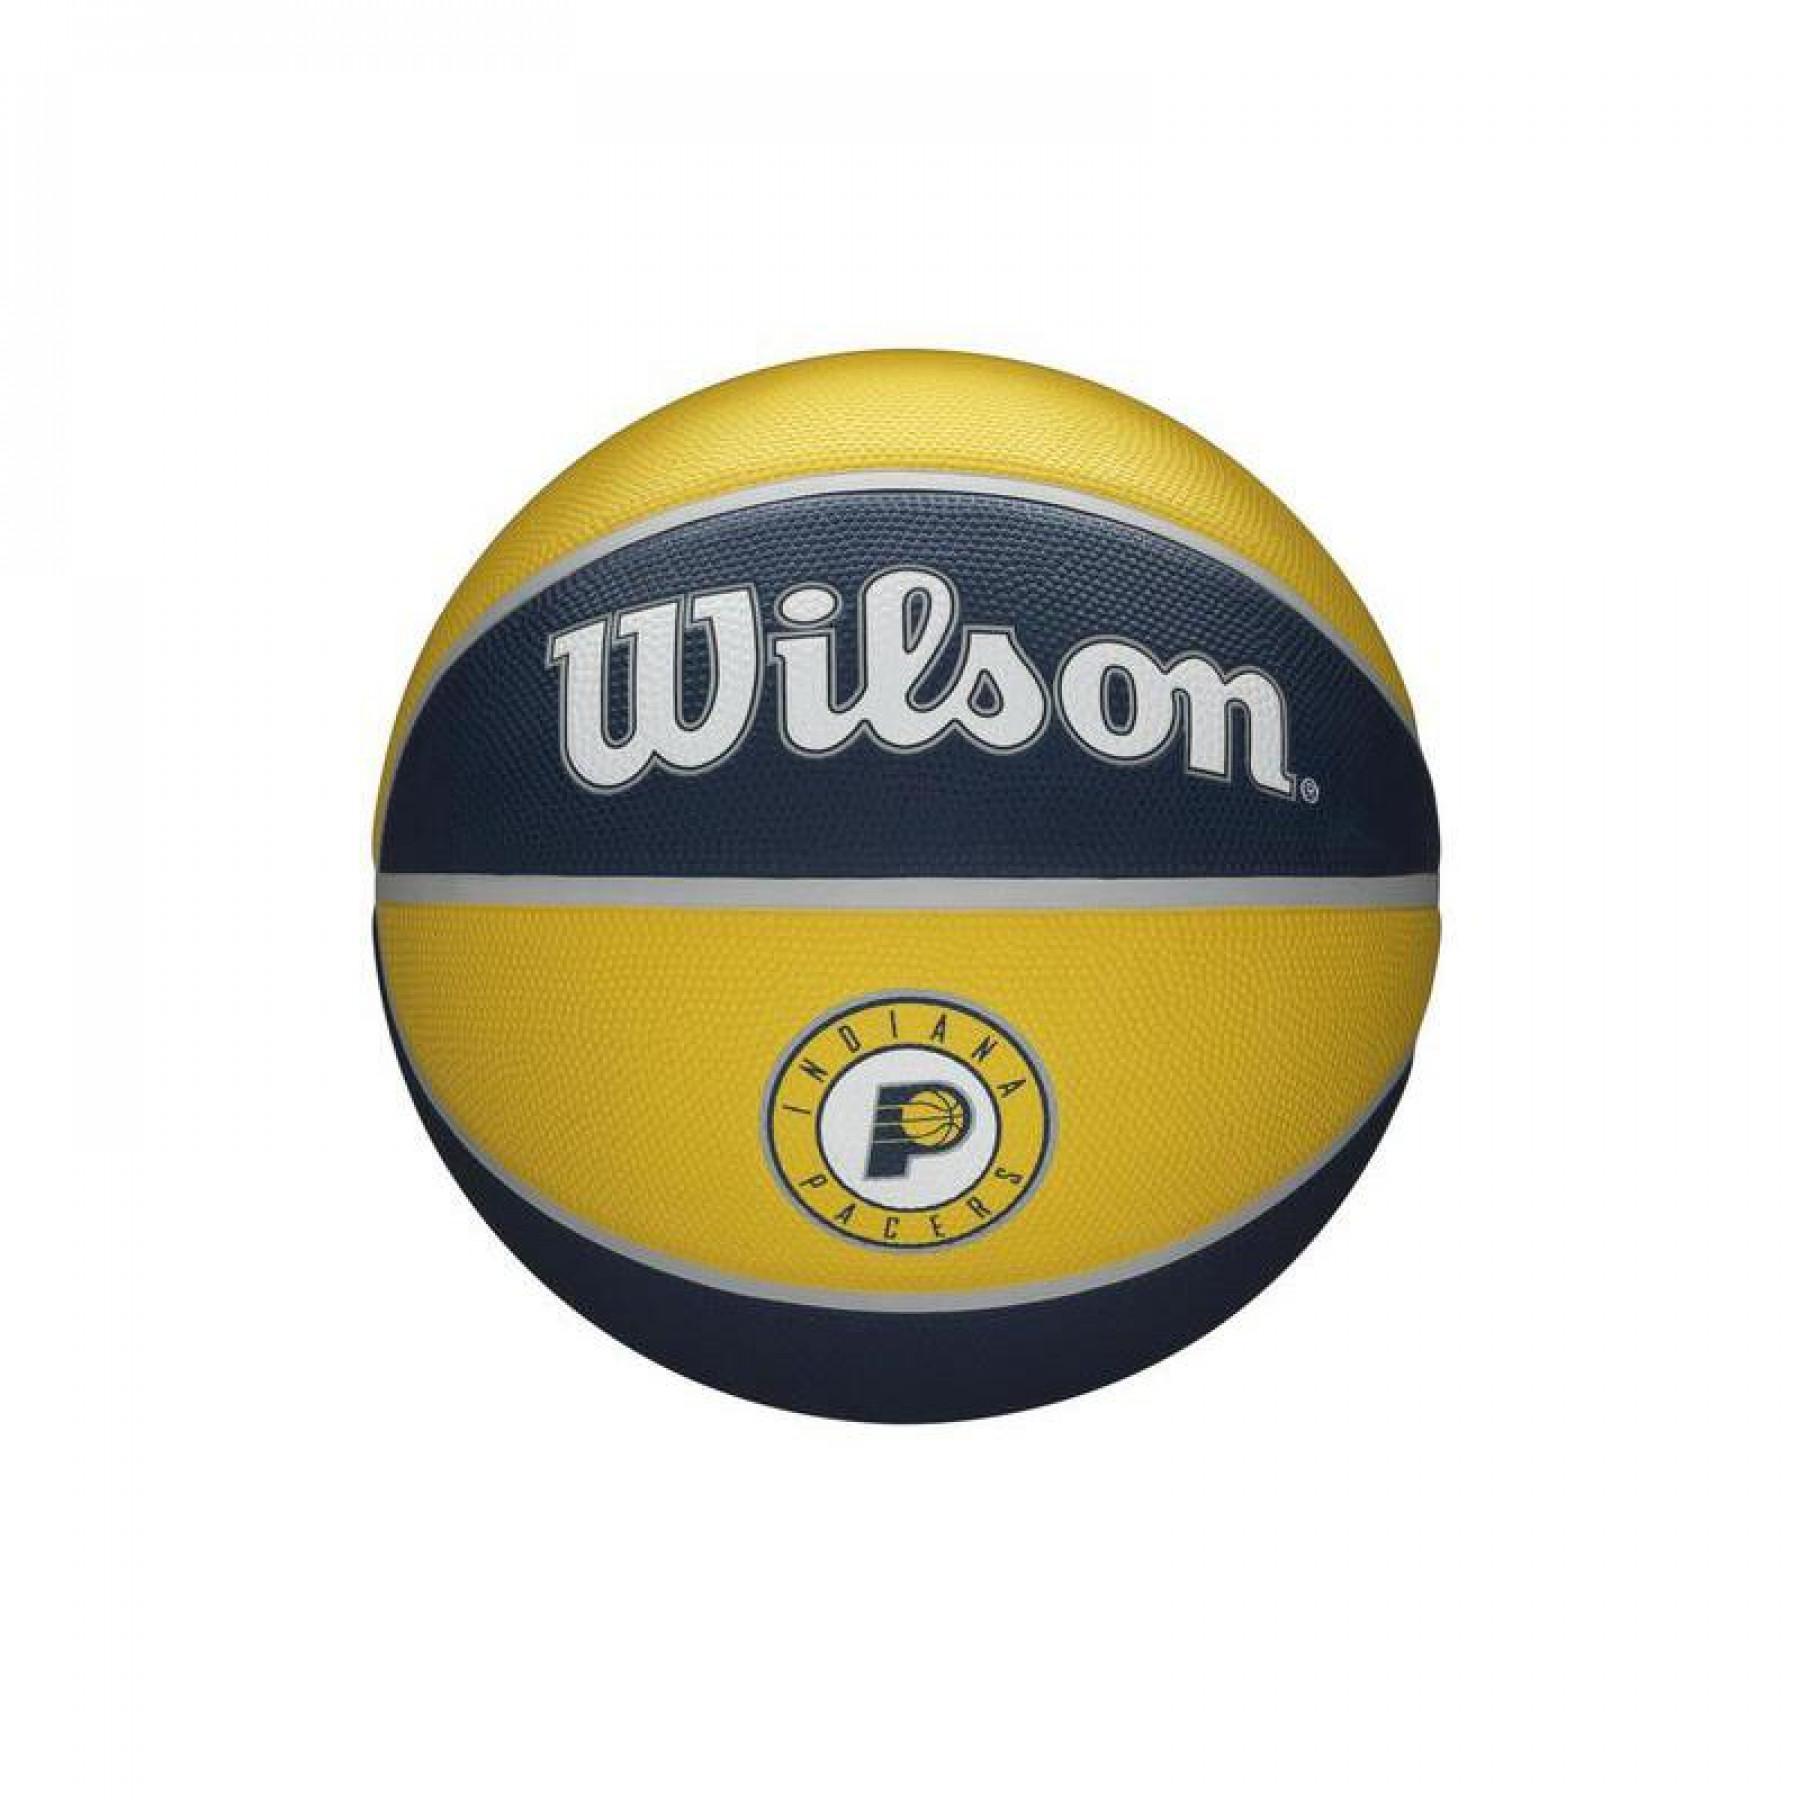 Ballon NBA Tribute Indiana Pacers